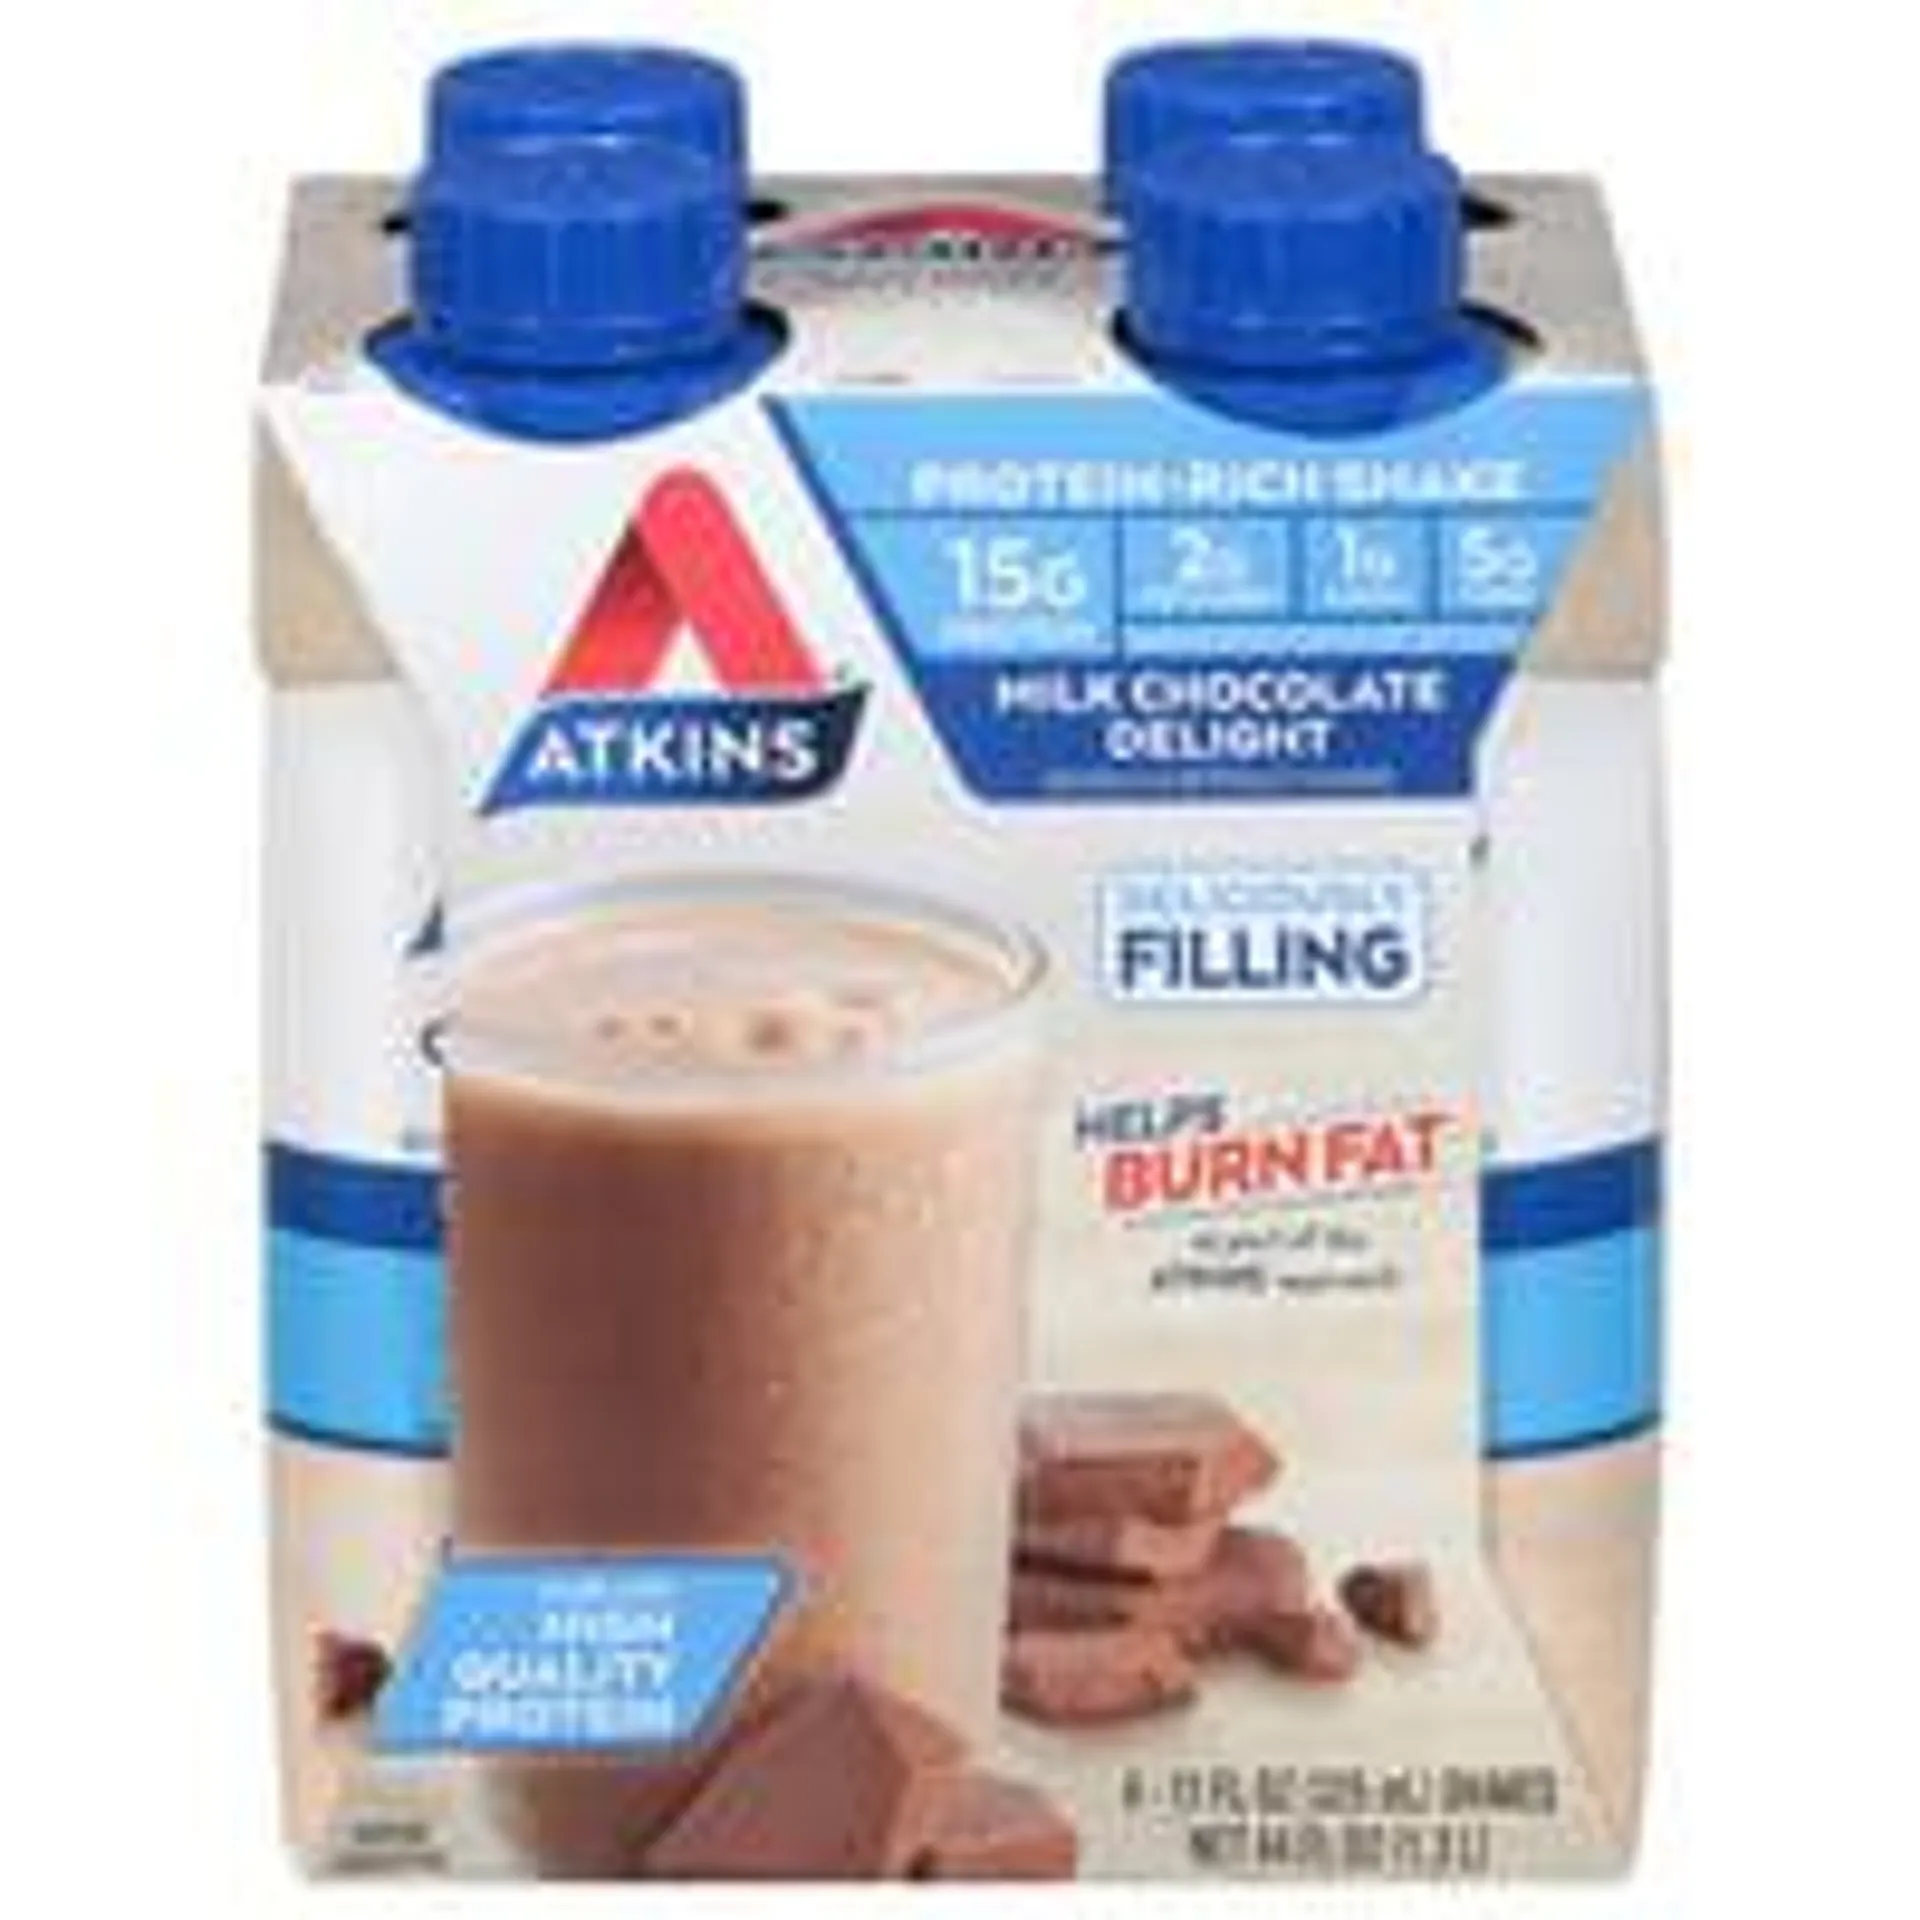 Atkins, Protein-Rich Shake, Milk Chocolate Delight